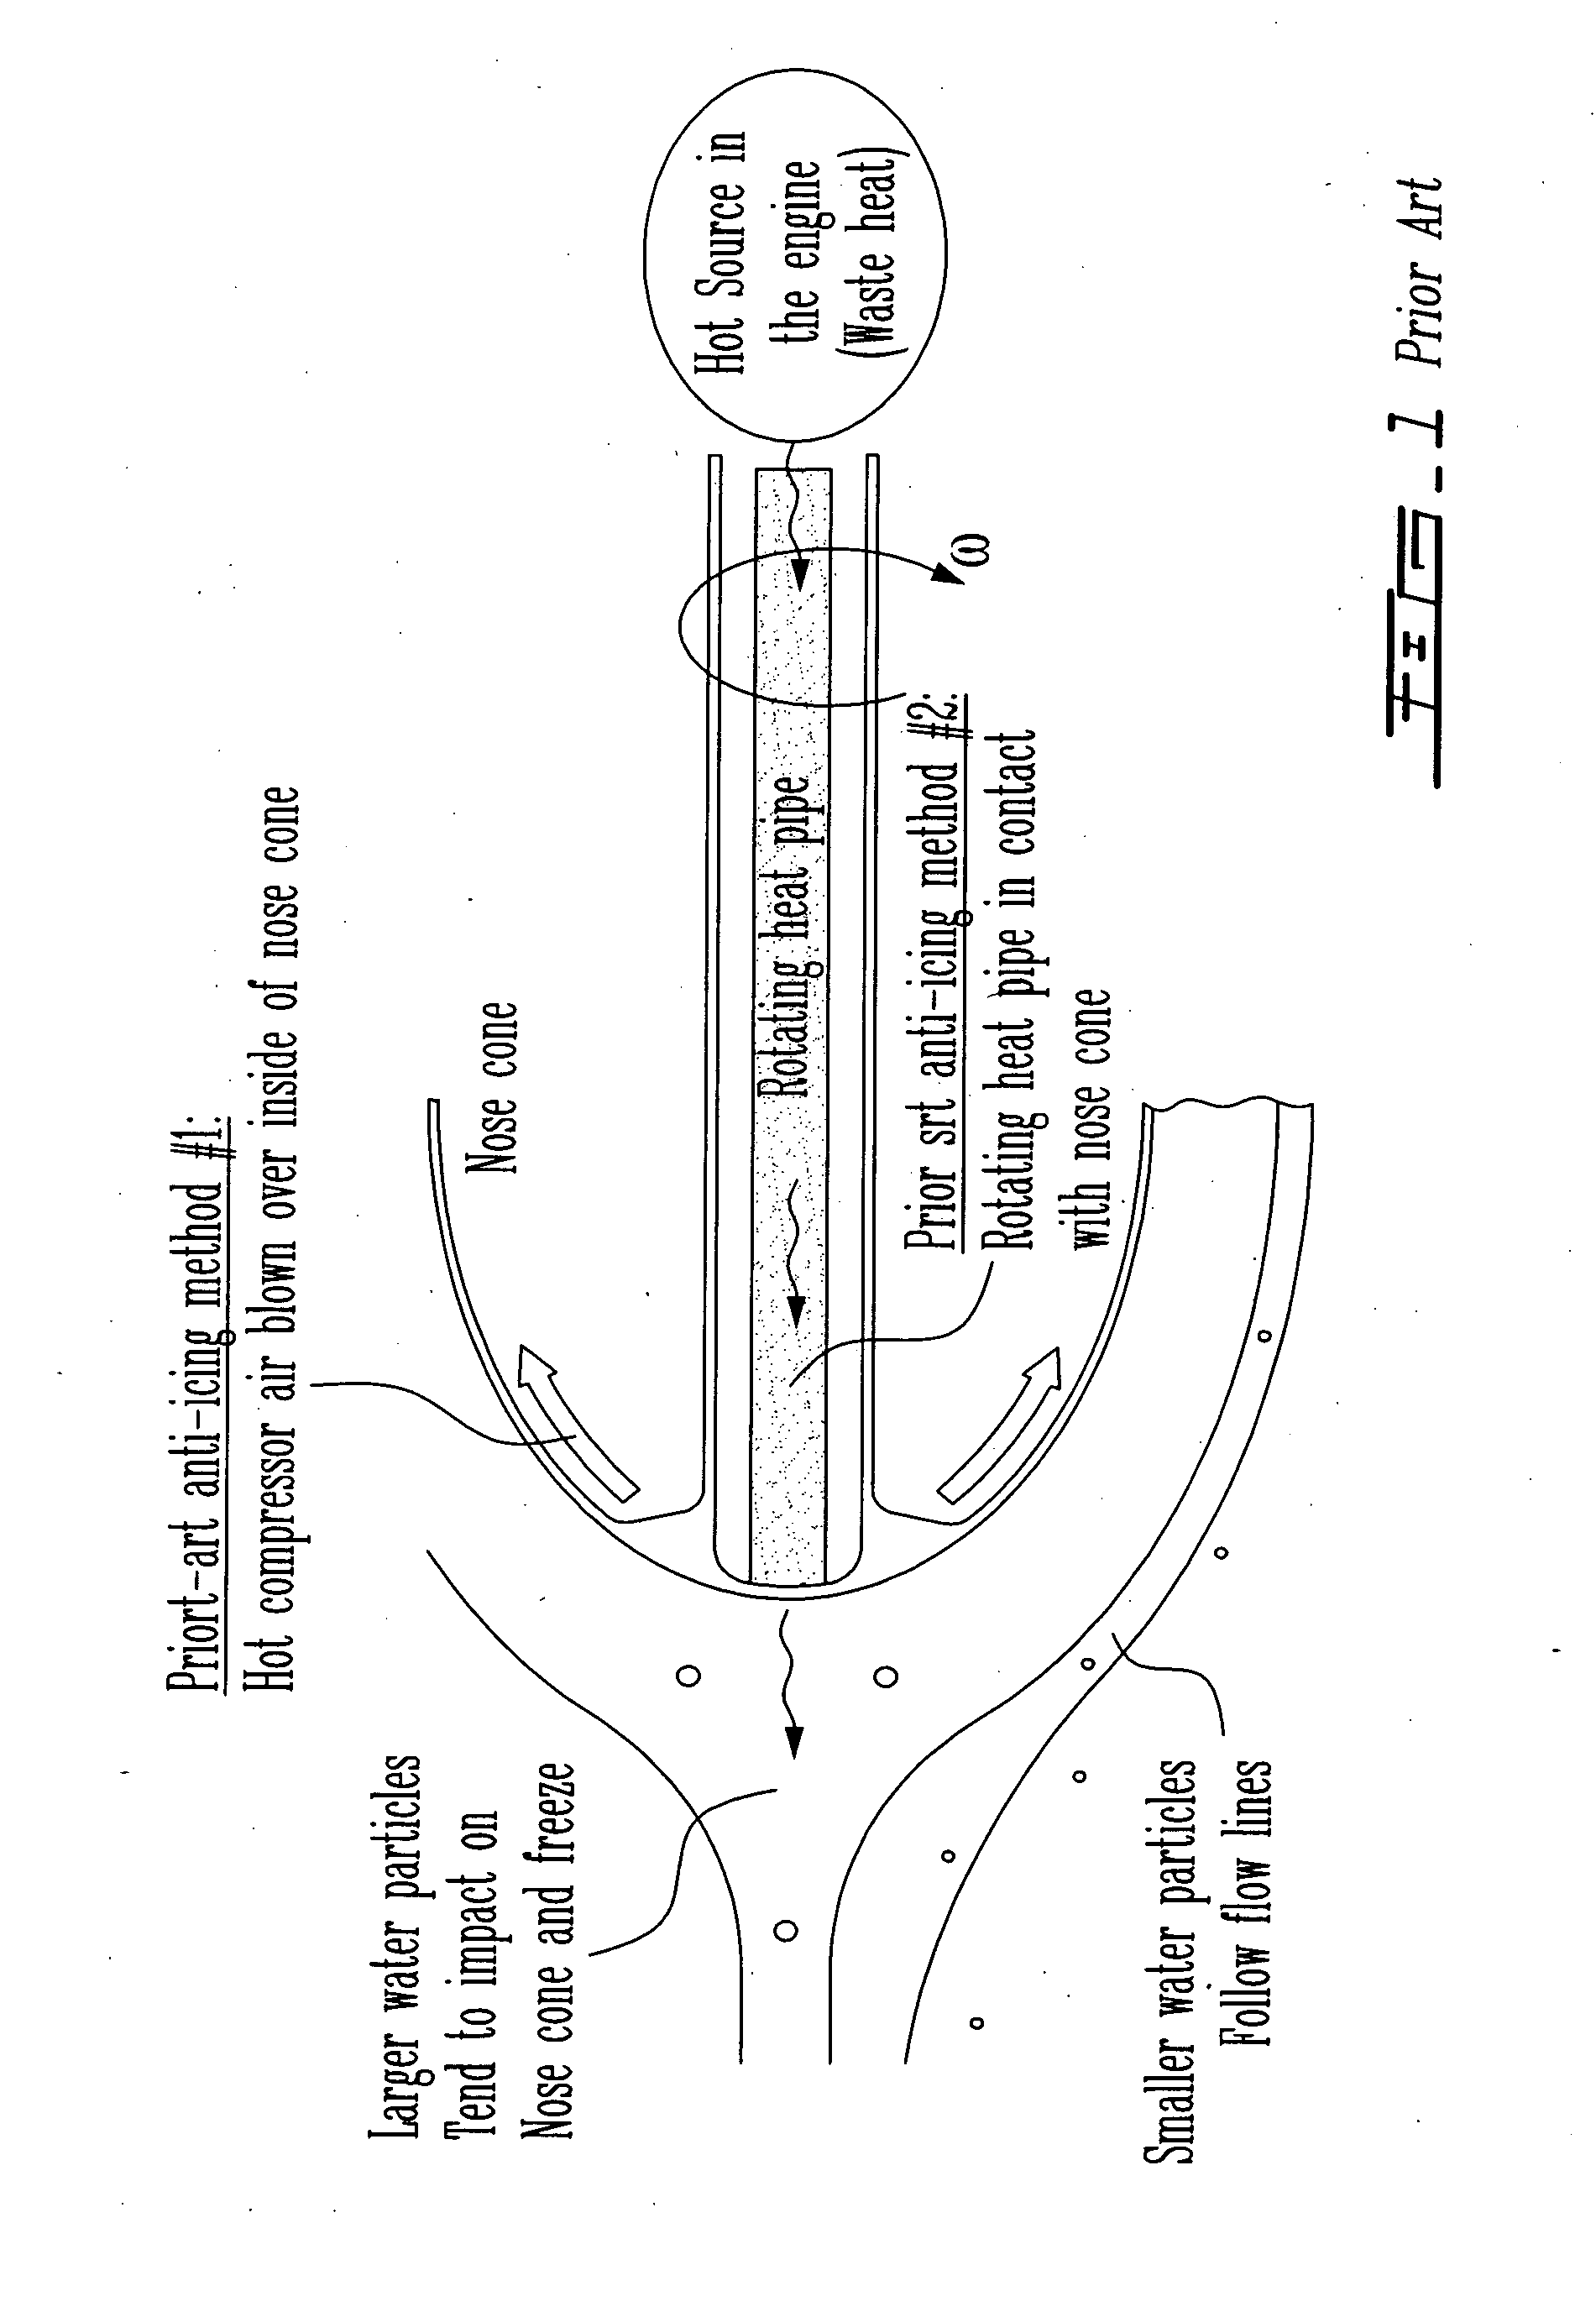 Anti-icing apparatus and method for aero-engine nose cone